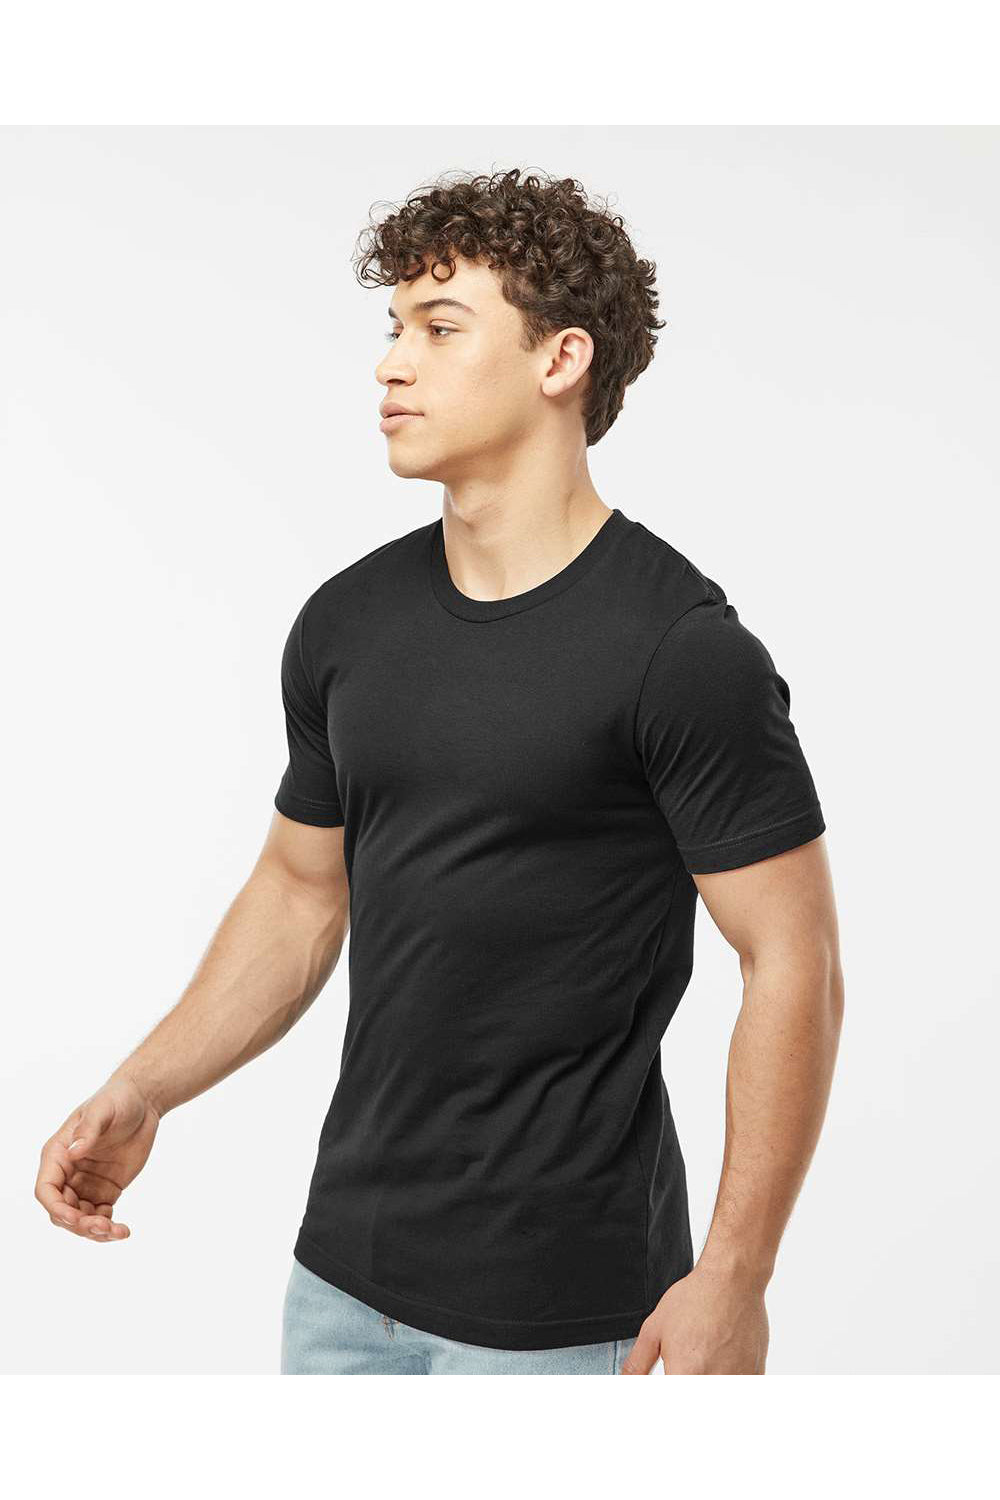 Tultex 502 Mens Premium Short Sleeve Crewneck T-Shirt Black Model Side